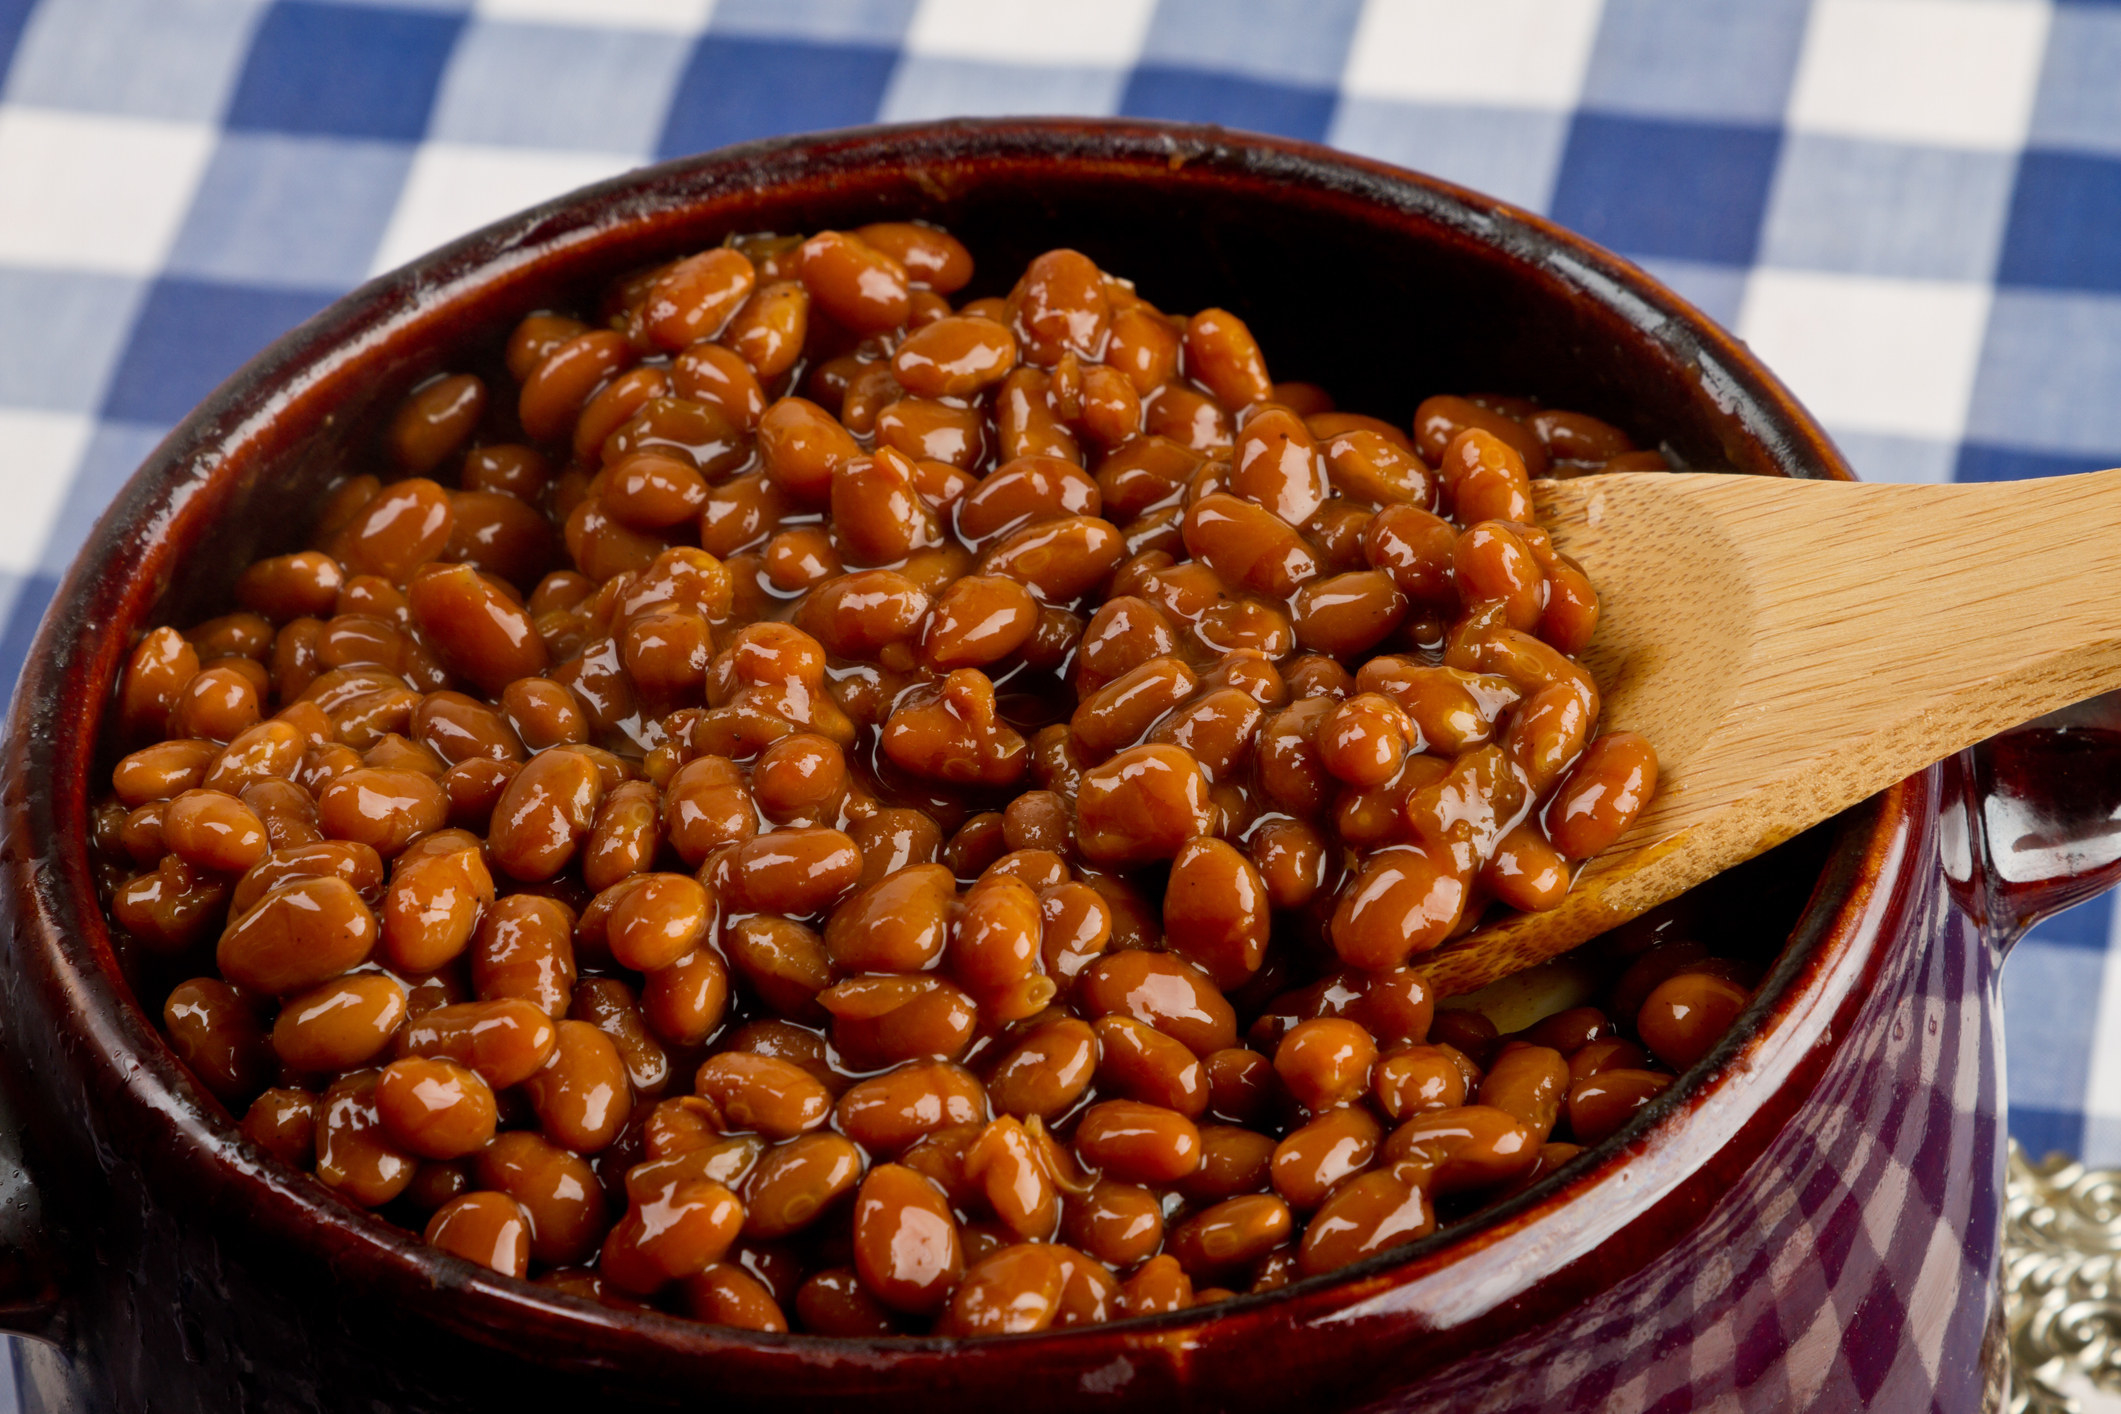 A pot full of baked beans